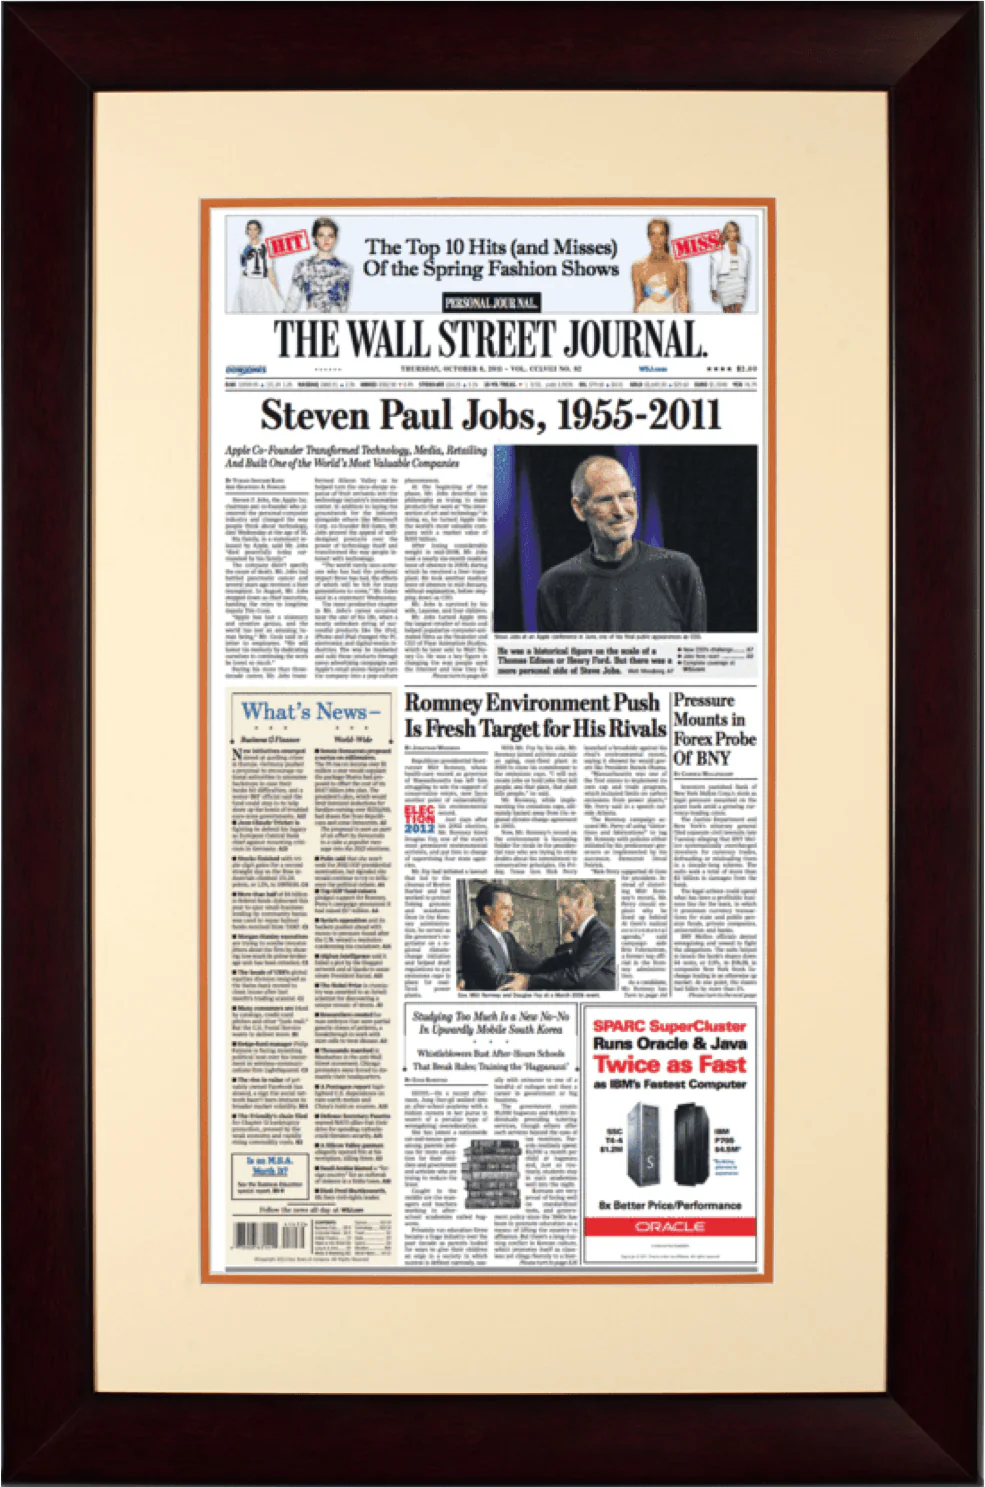 Steven Paul Jobs, 1955-2011 | The Wall Street Journal Framed Reprint, October 6, 2011